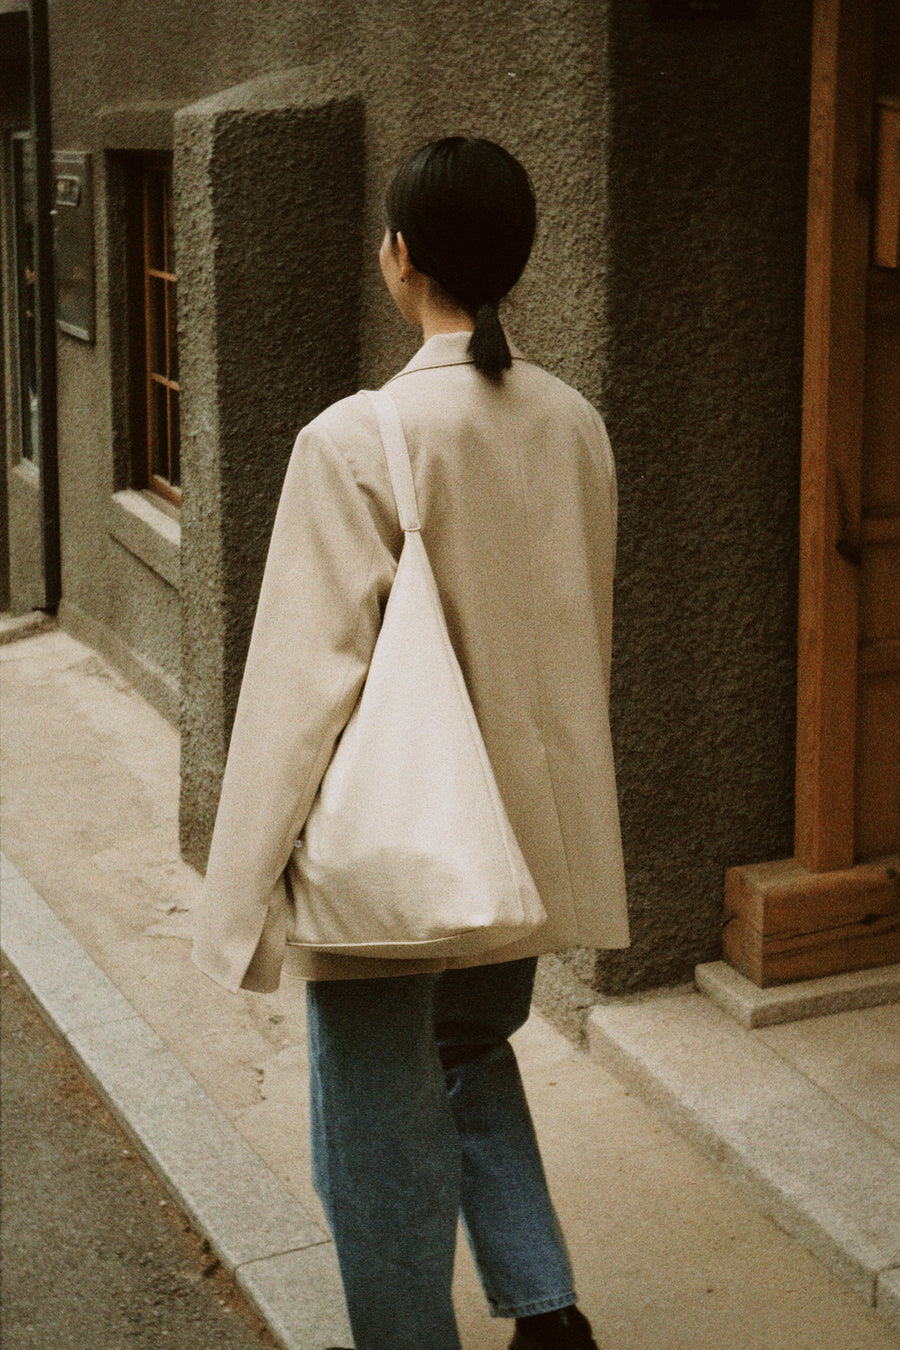 Soft Leather Bag